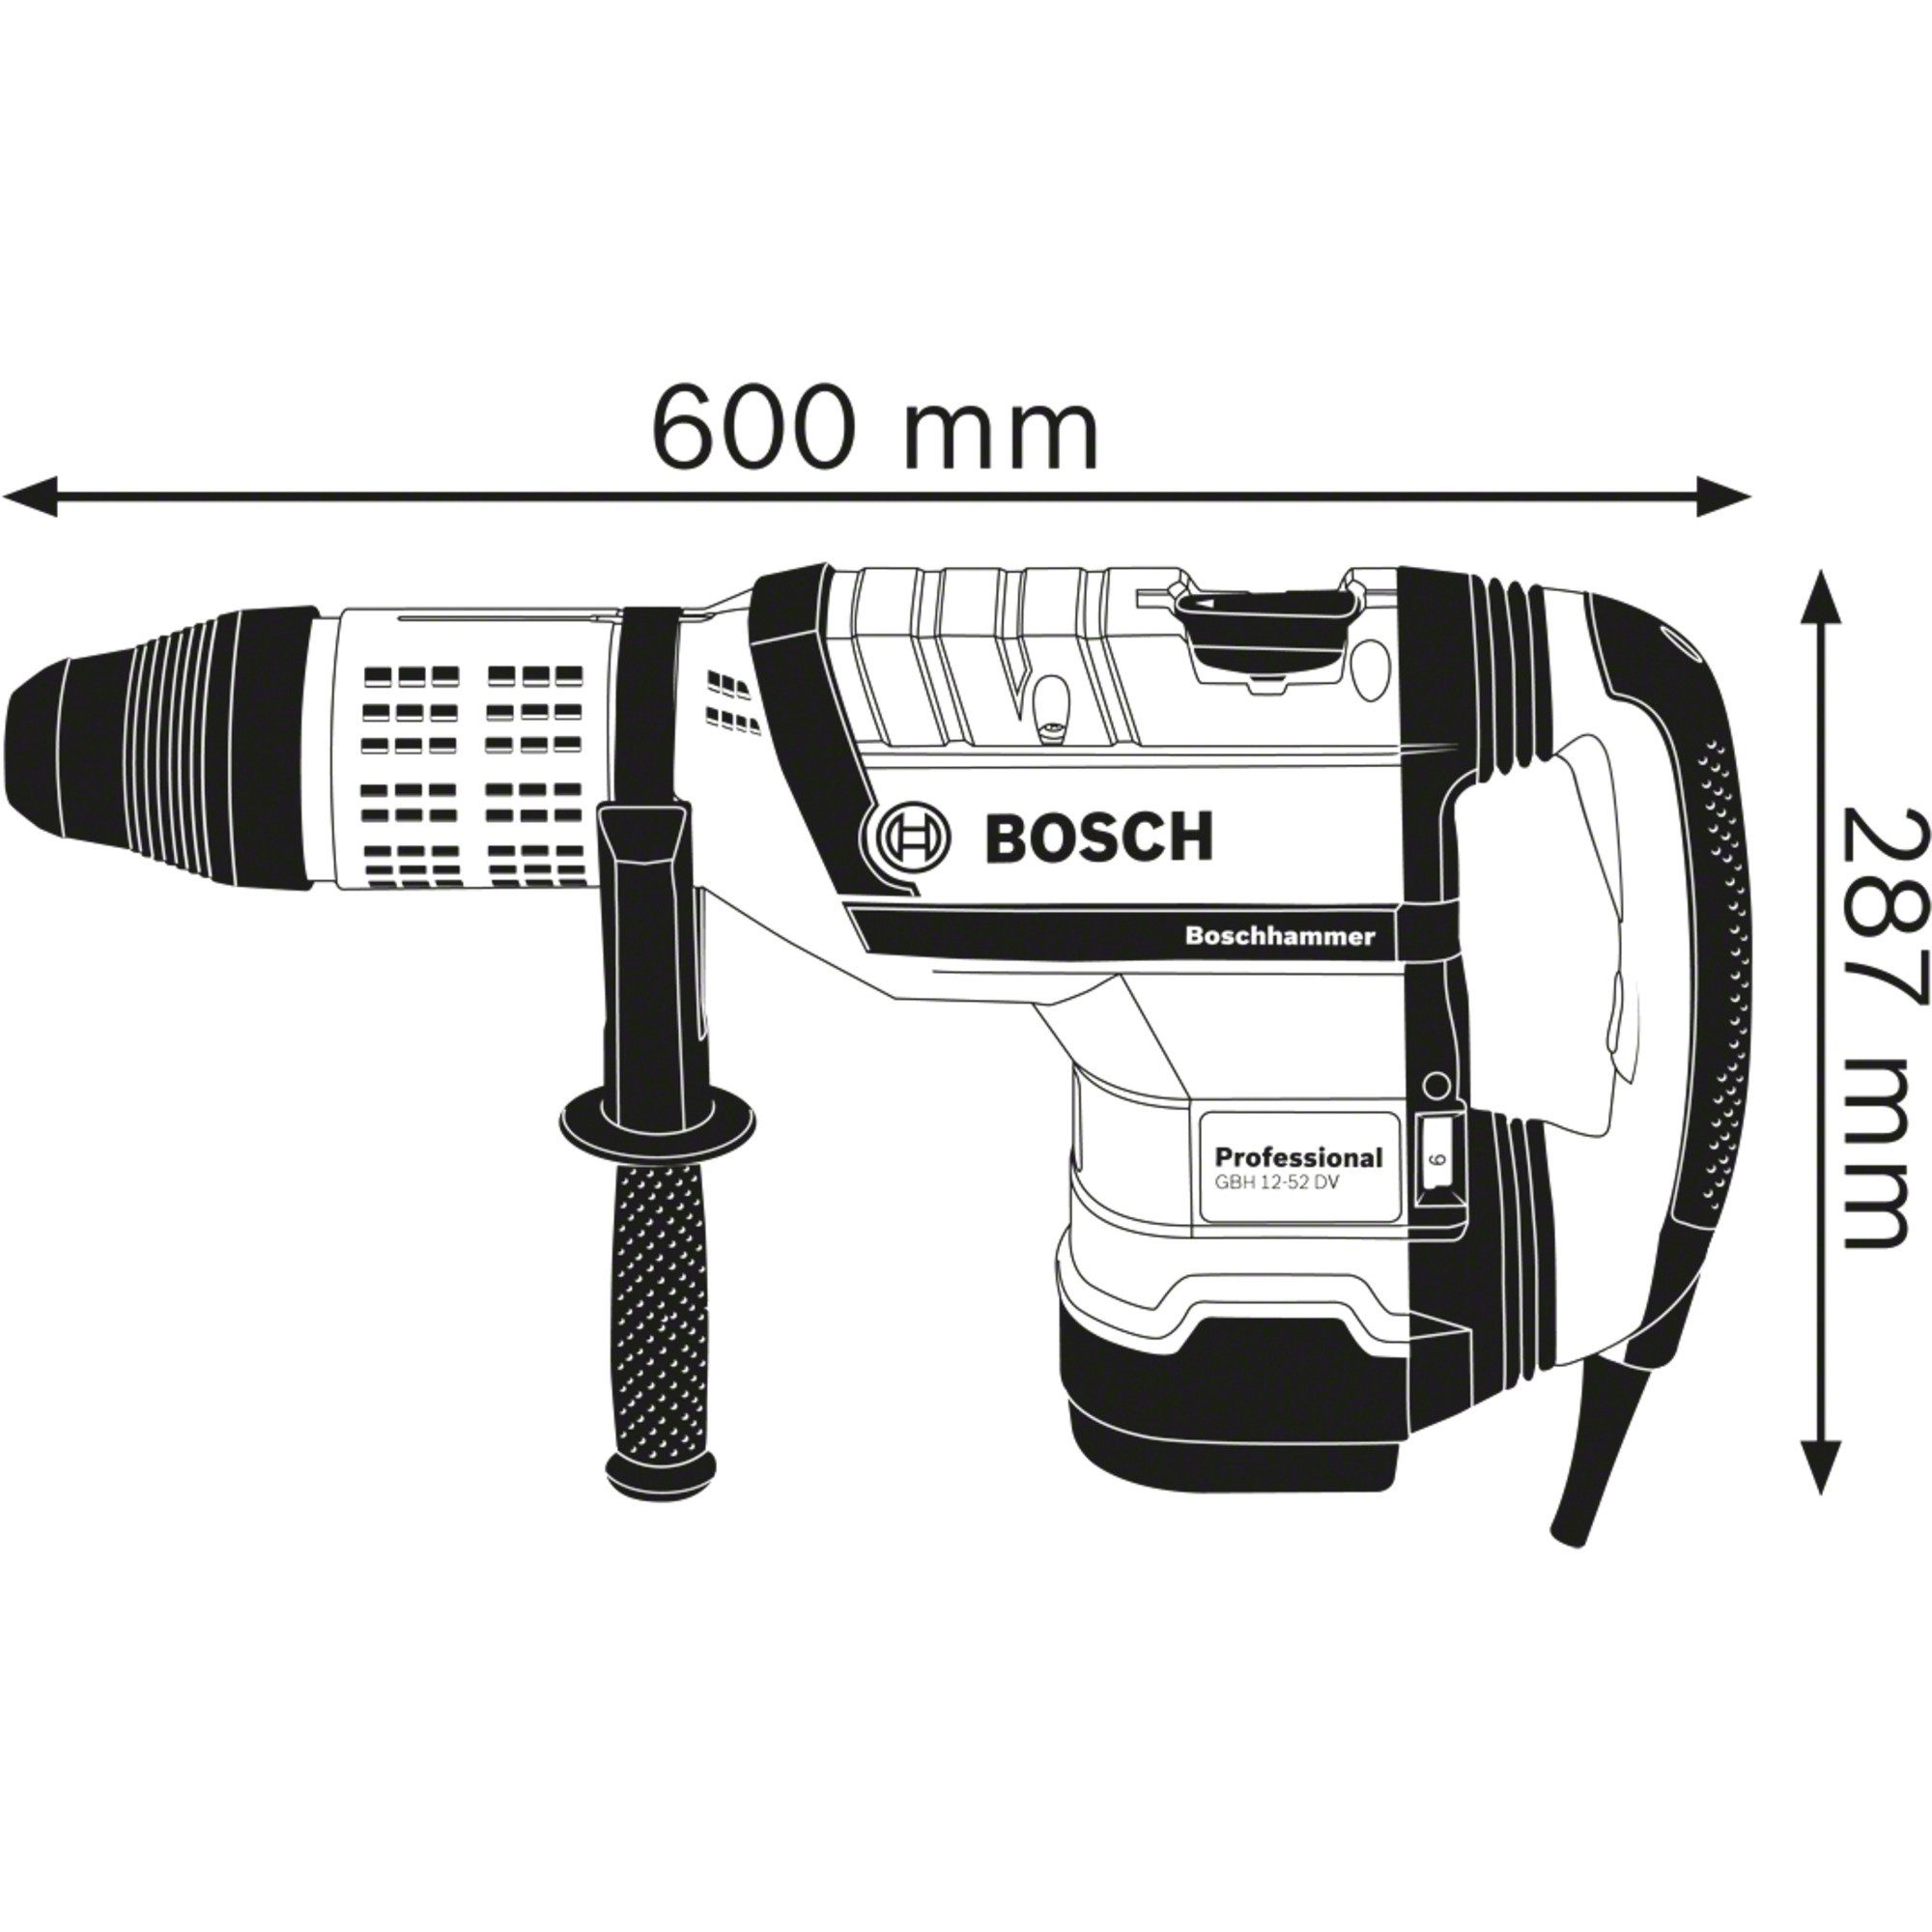 (1.700 12-52 DV, Bohrhammer BOSCH Bohrhammer Bosch GBH Professional